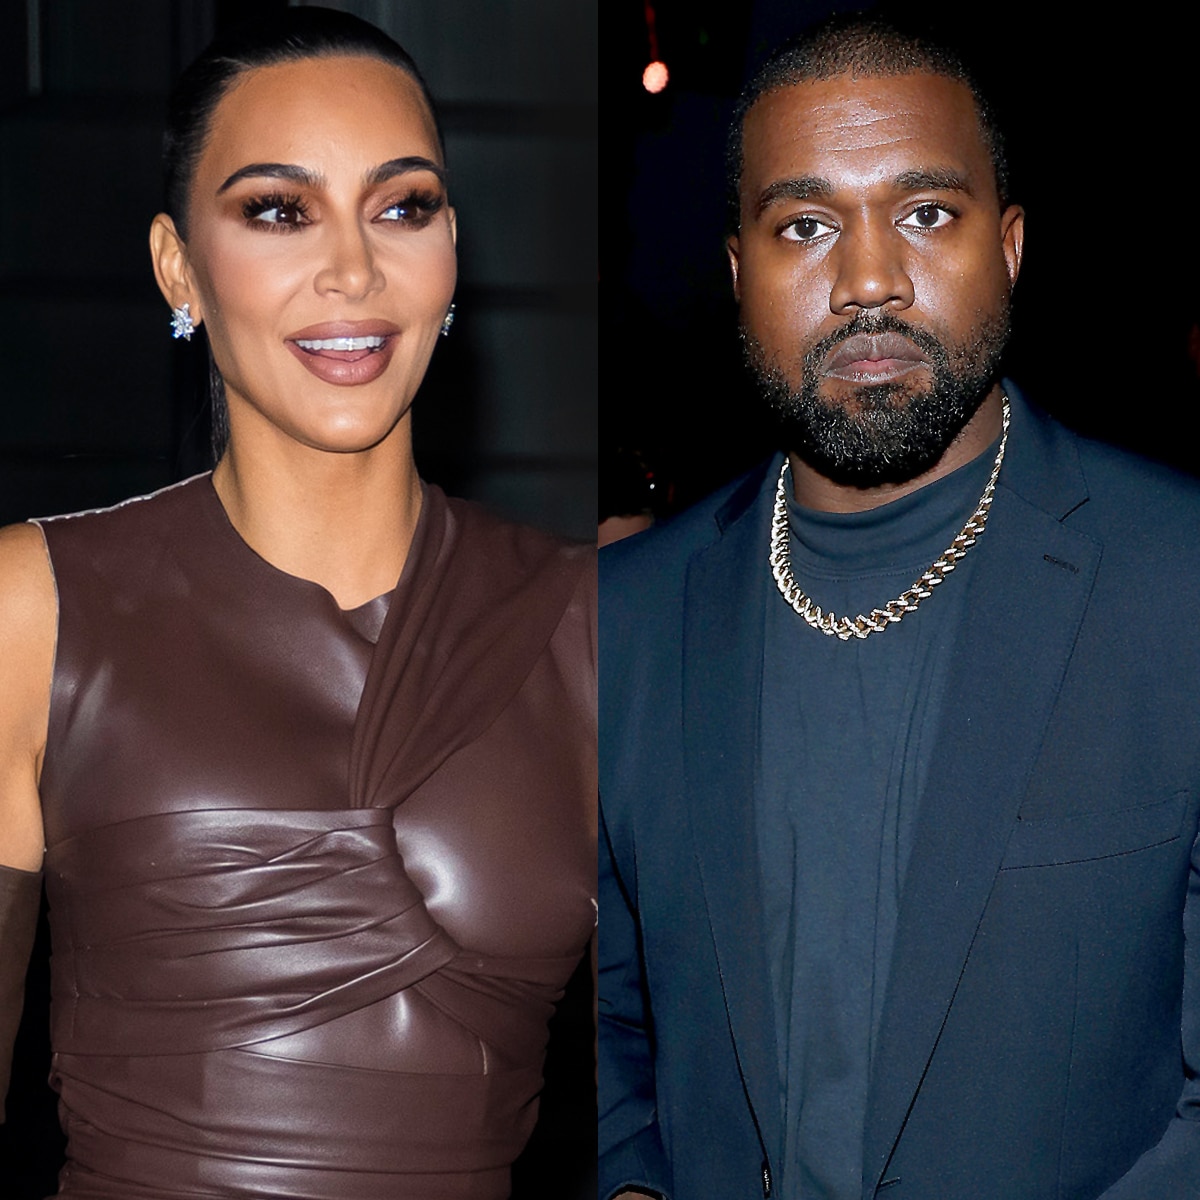 Kim Kardashian Weighs in on "Hard" Dynamic With Kanye West in Tense Kardashians Teaser